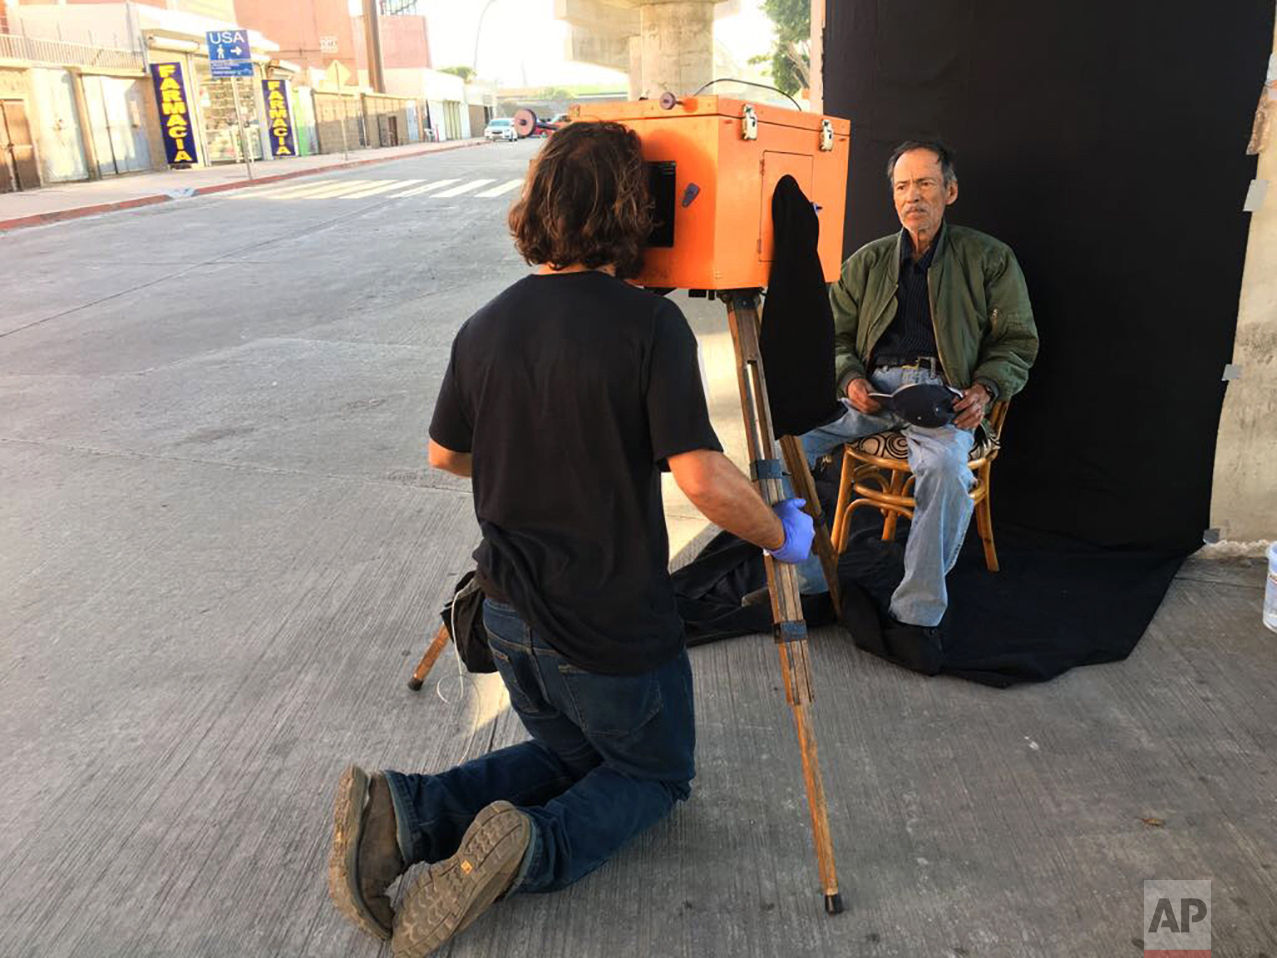  AP photographer Rodrigo Abd uses a wooden box camera to make a portrait of Mexican retiree Miguel Trejo, in Tijuana, Mexico, Wednesday, April 5, 2017. (AP Photo/Jordi Lebrija) 